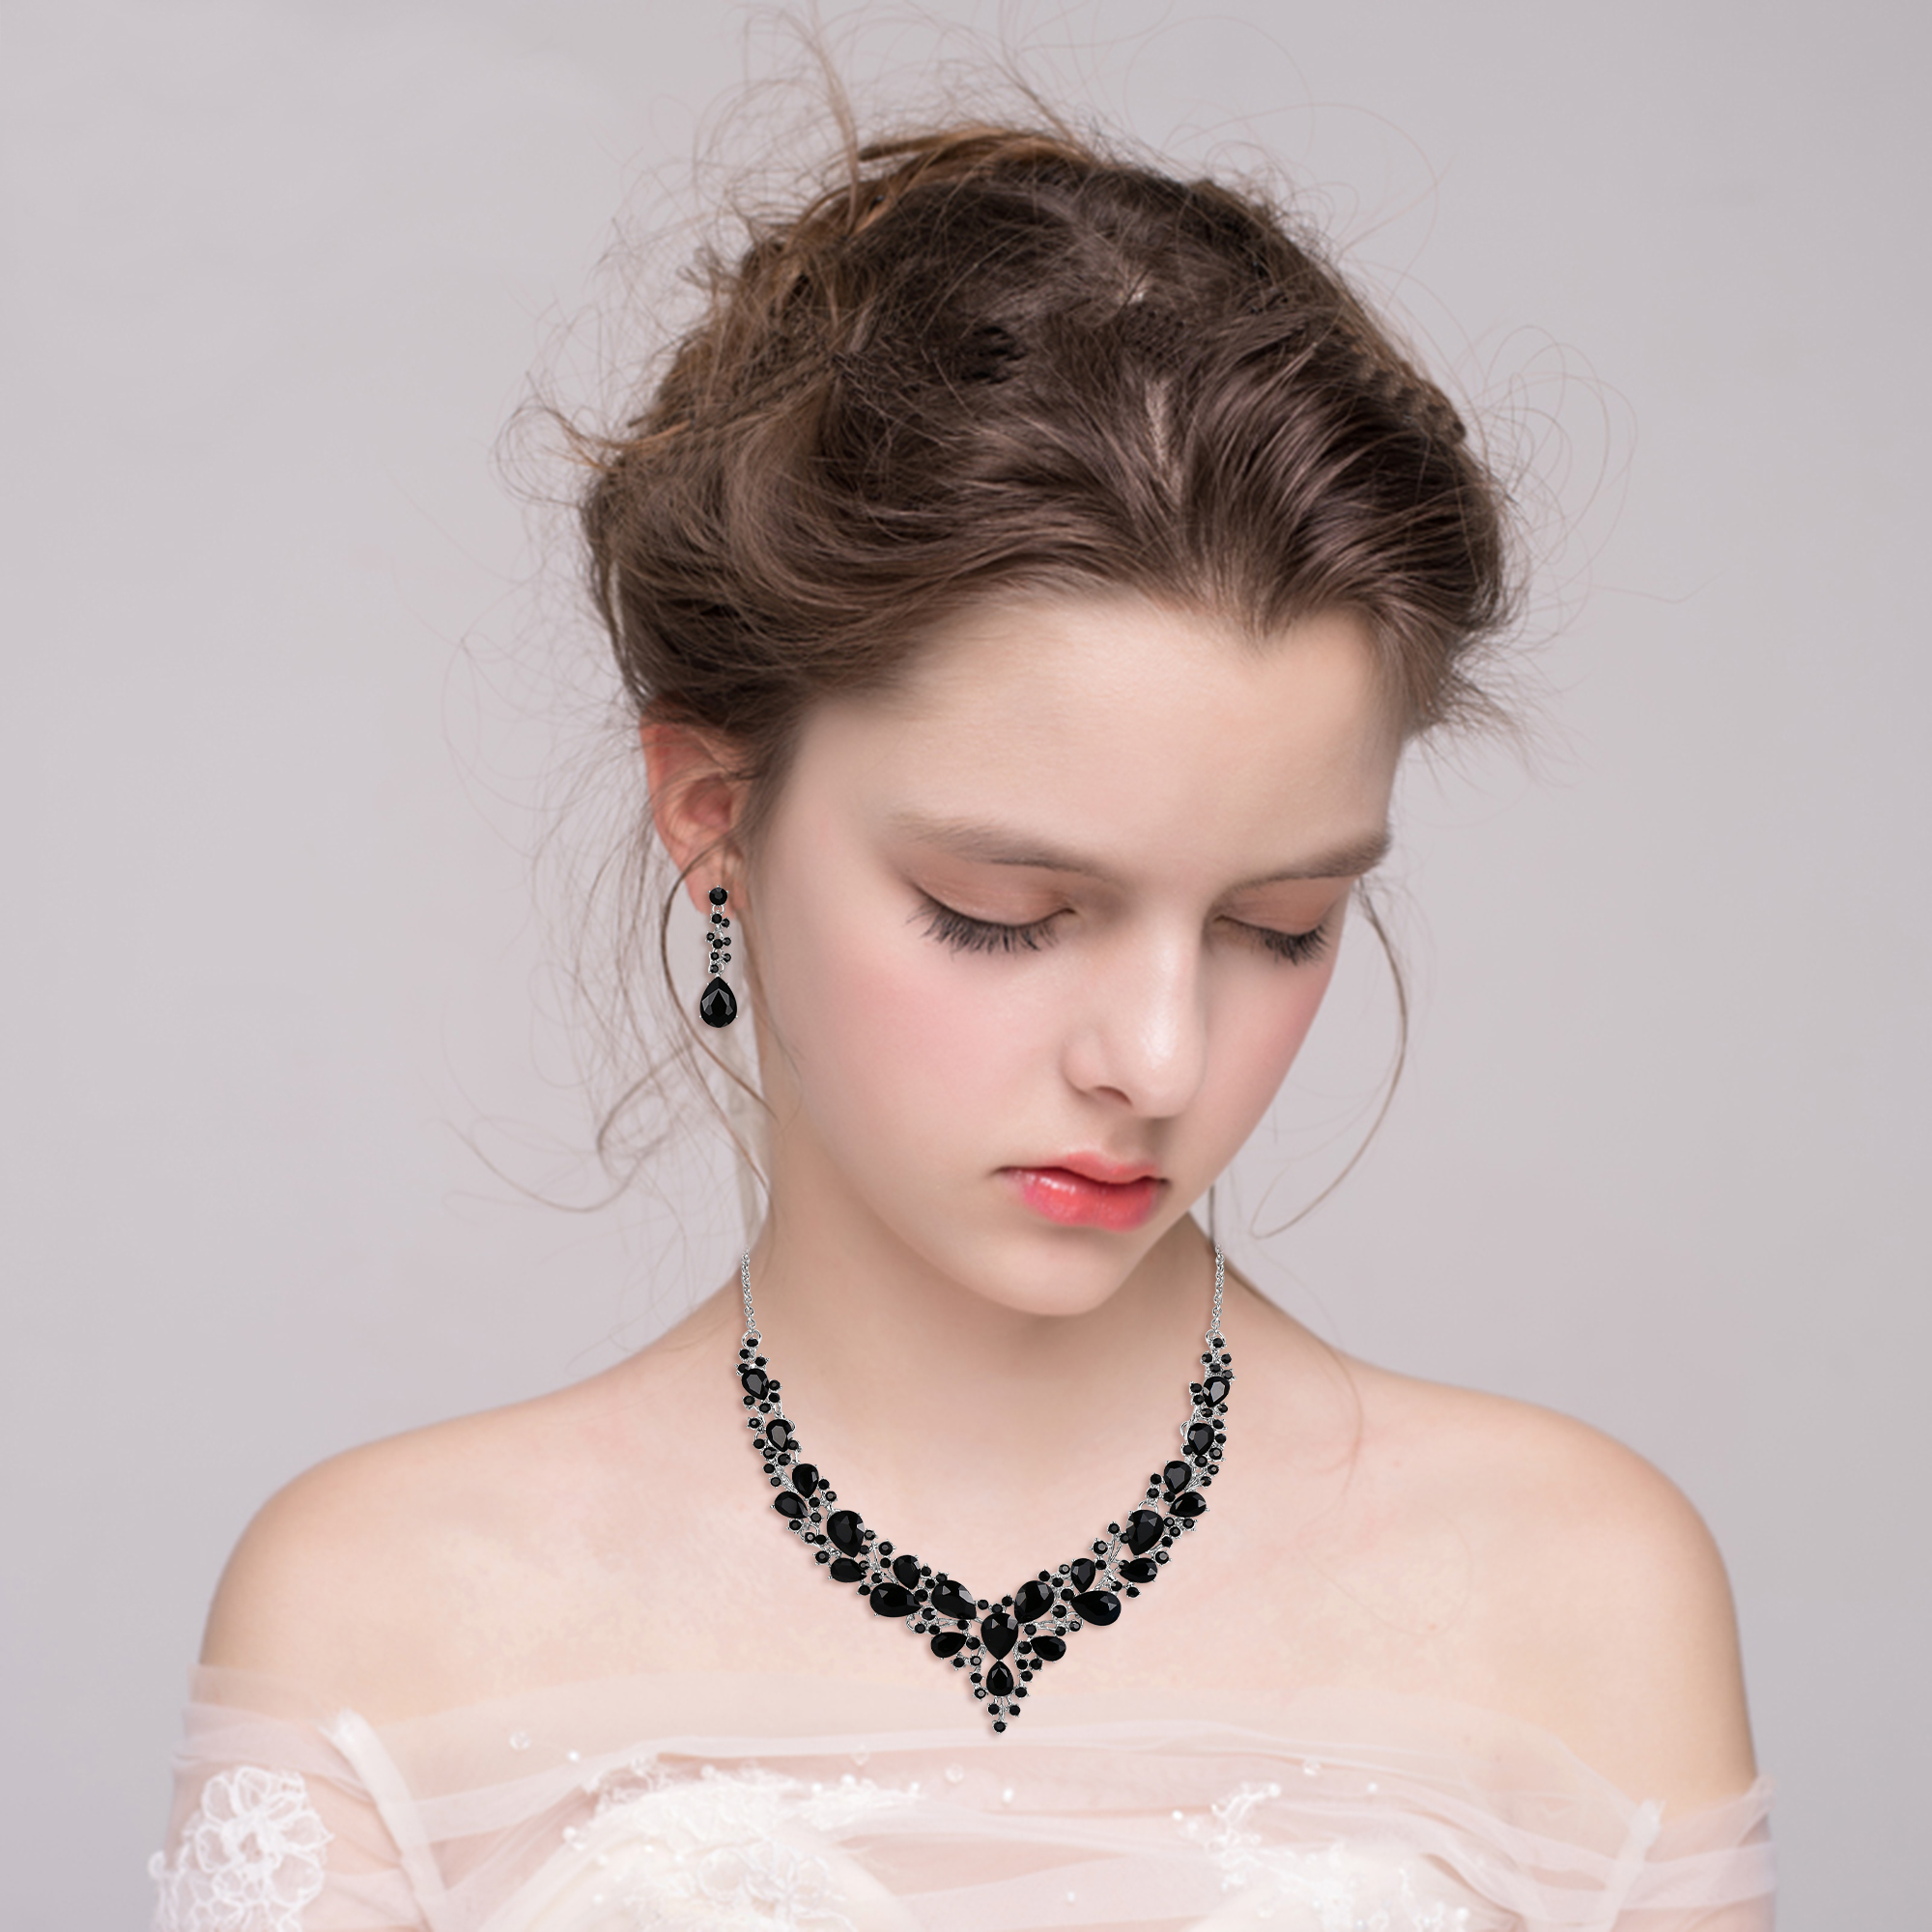 Wedure Wedding Bridal Necklace Earrings Jewelry Set for Women, Austrian Crystal Teardrop Cluster Statement Necklace Dangle Earrings Set Black Silver-Tone - image 2 of 5